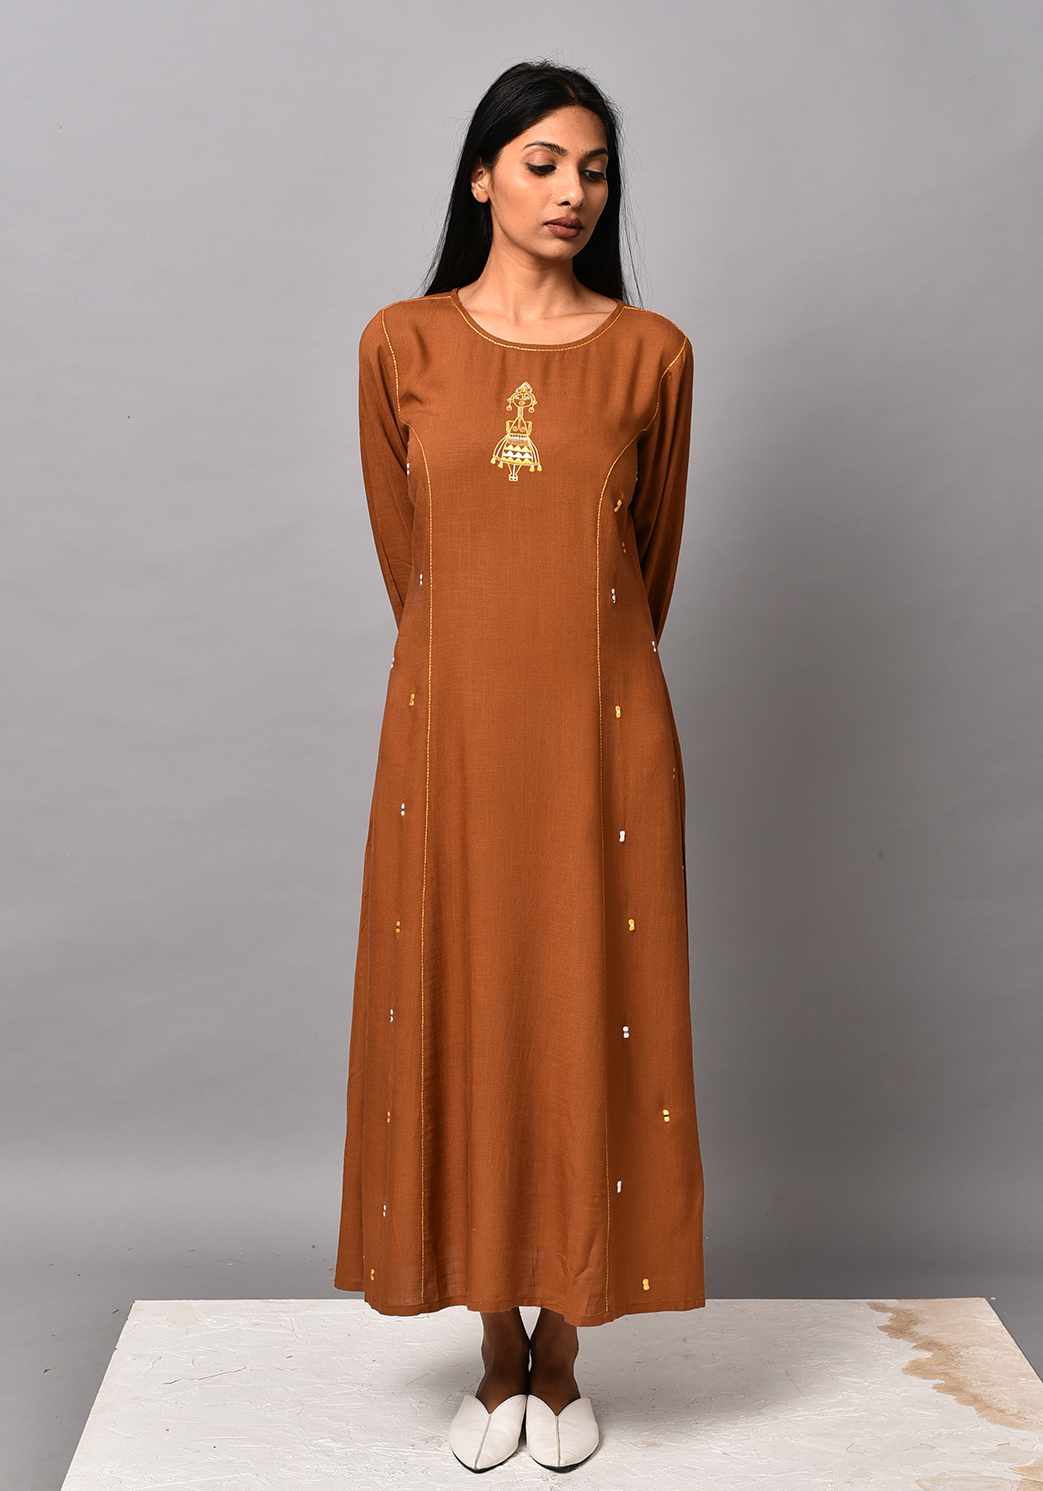 Shafira A-Line Brown Dress